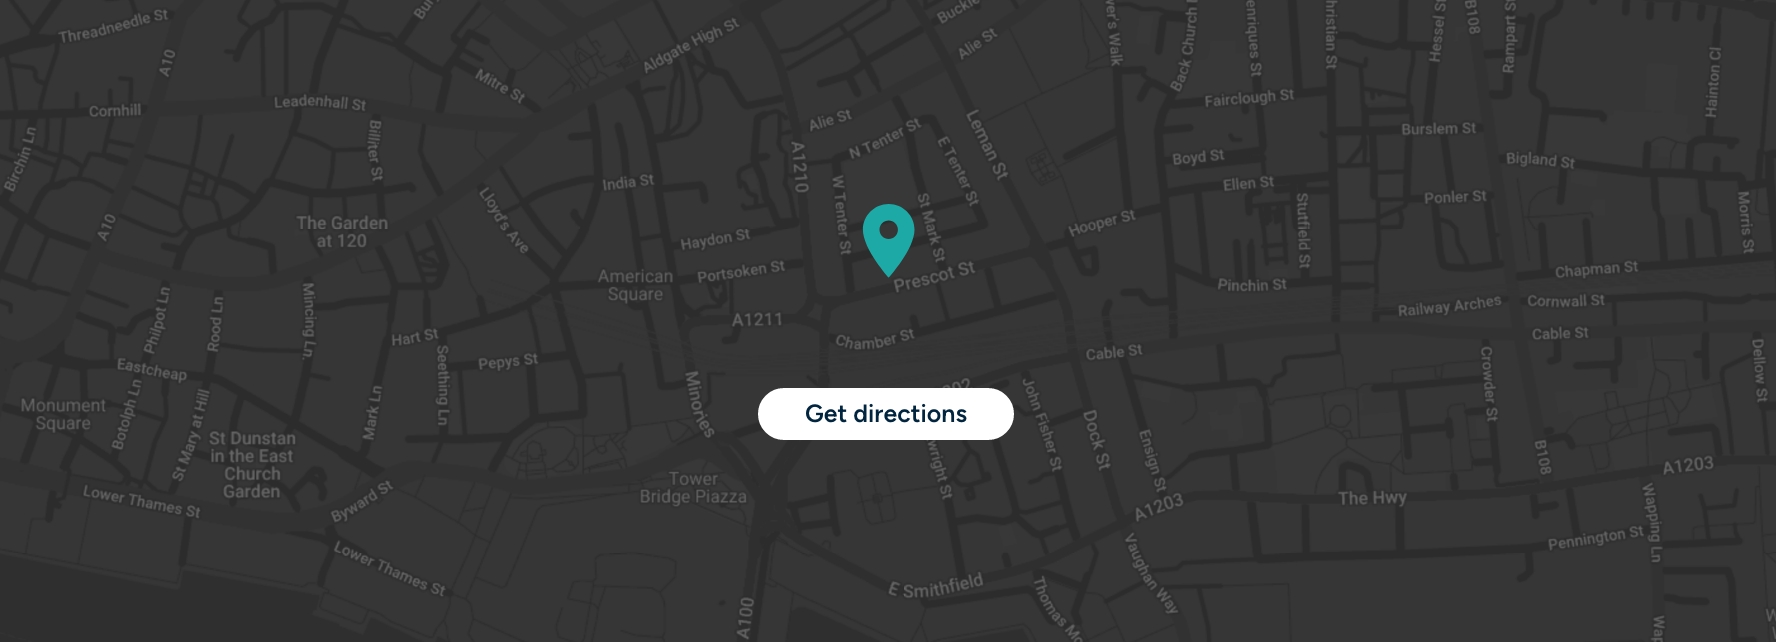 venue-location-map-2